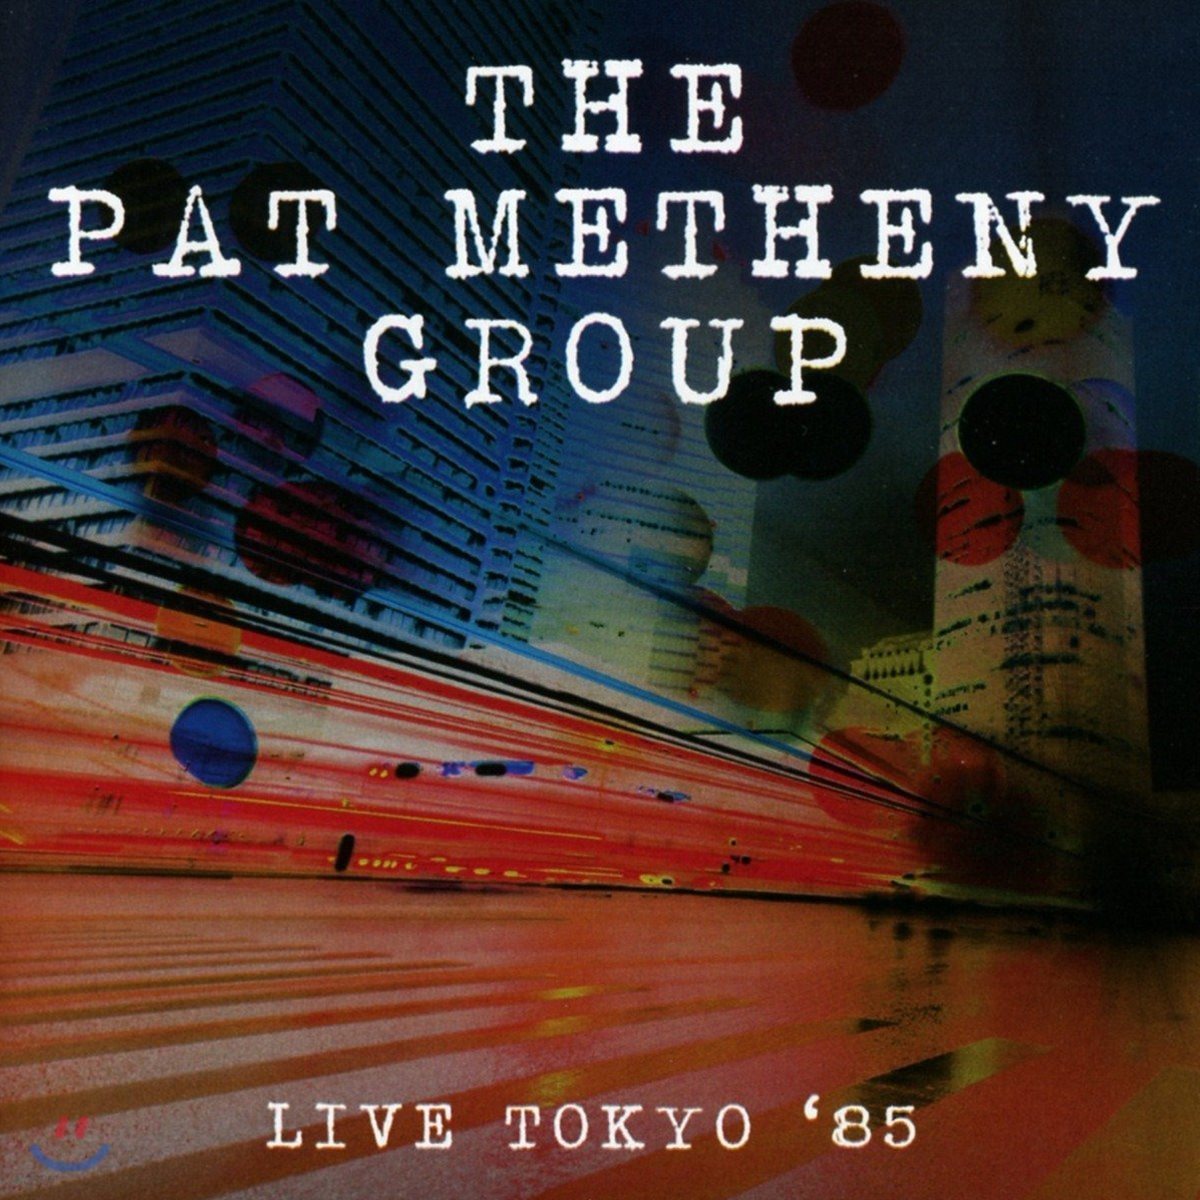 Pat Metheny Group - Live Tokyo ‘85 팻 메스니 그룹 1985년 일본 도쿄 라이브